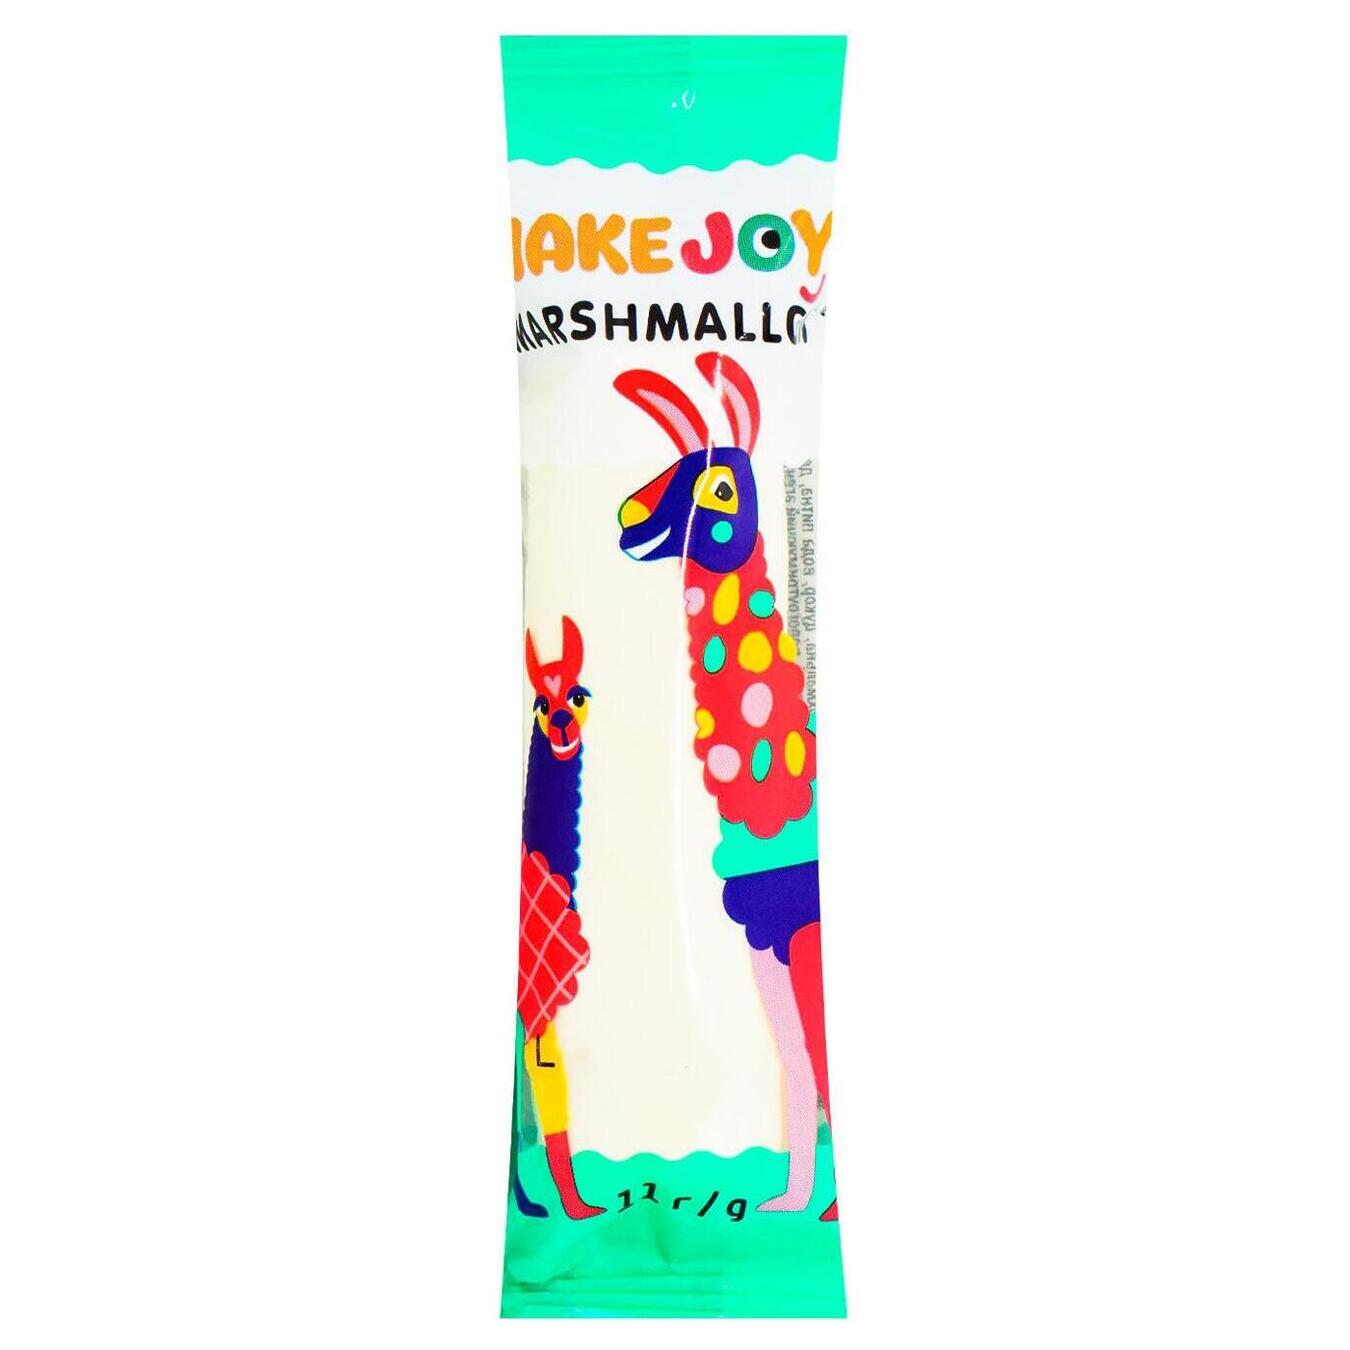 Marshmallow Make joy lamaʼs style 11g in assortment 2